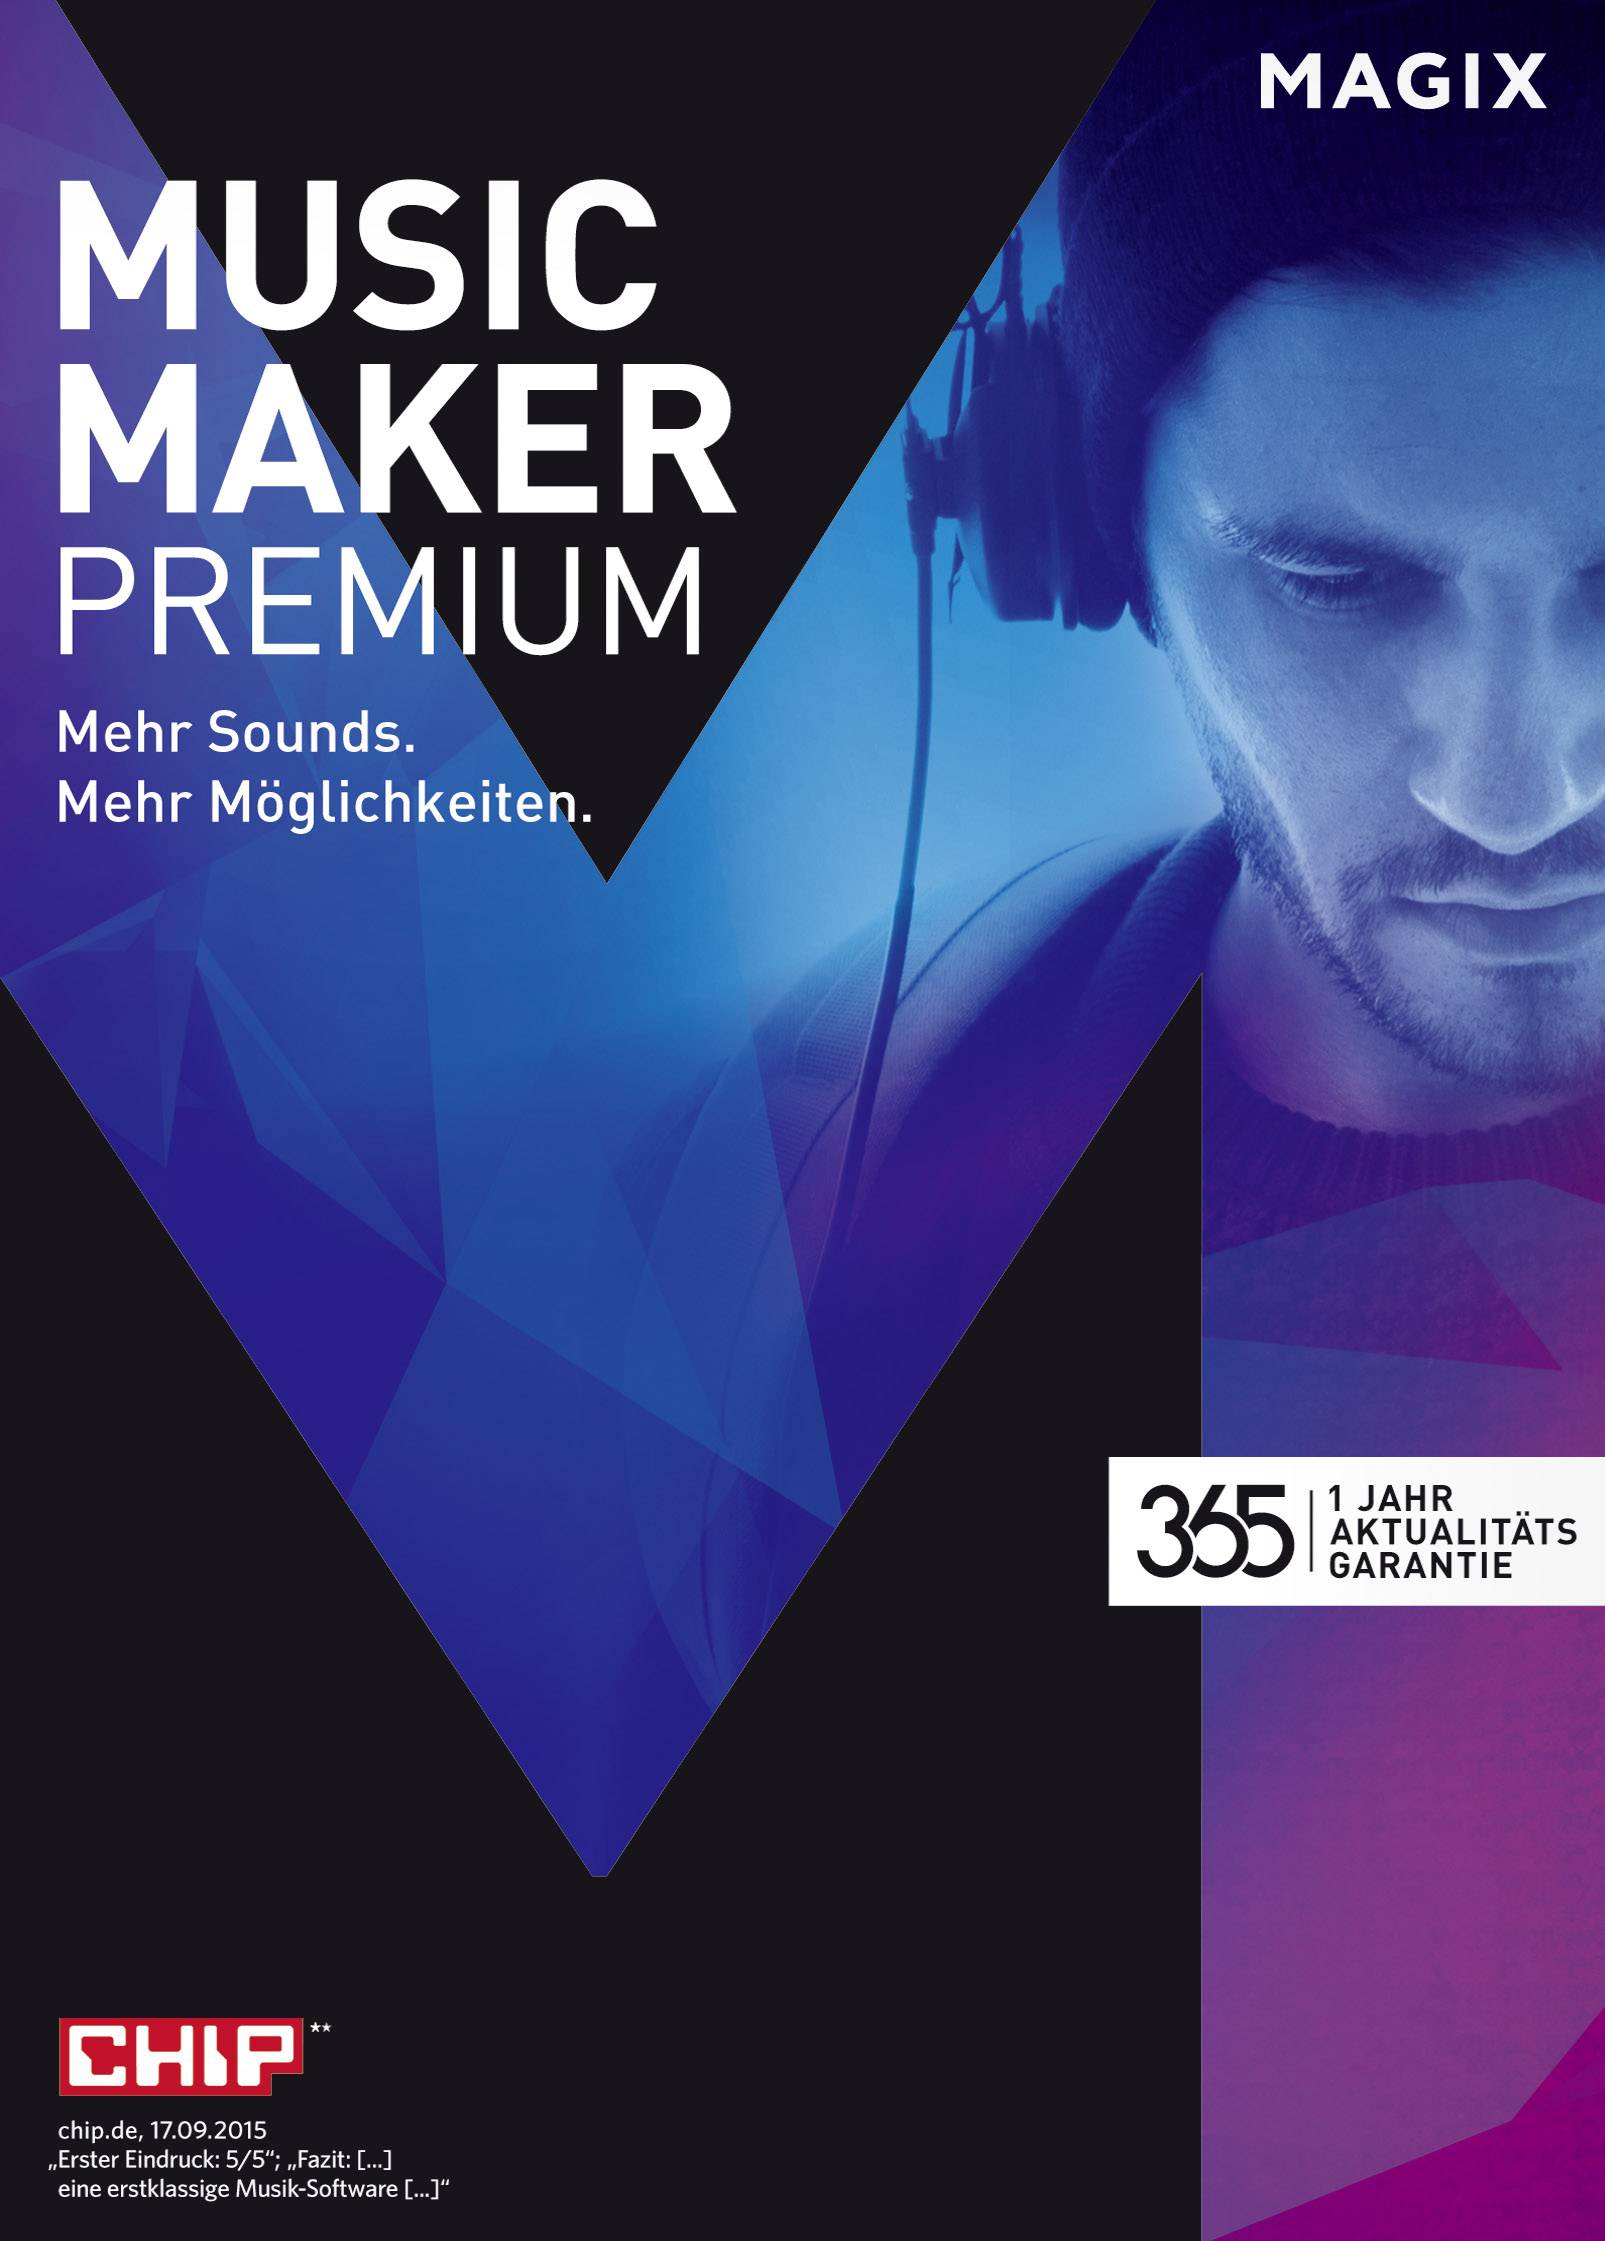 magix music maker 2015 review